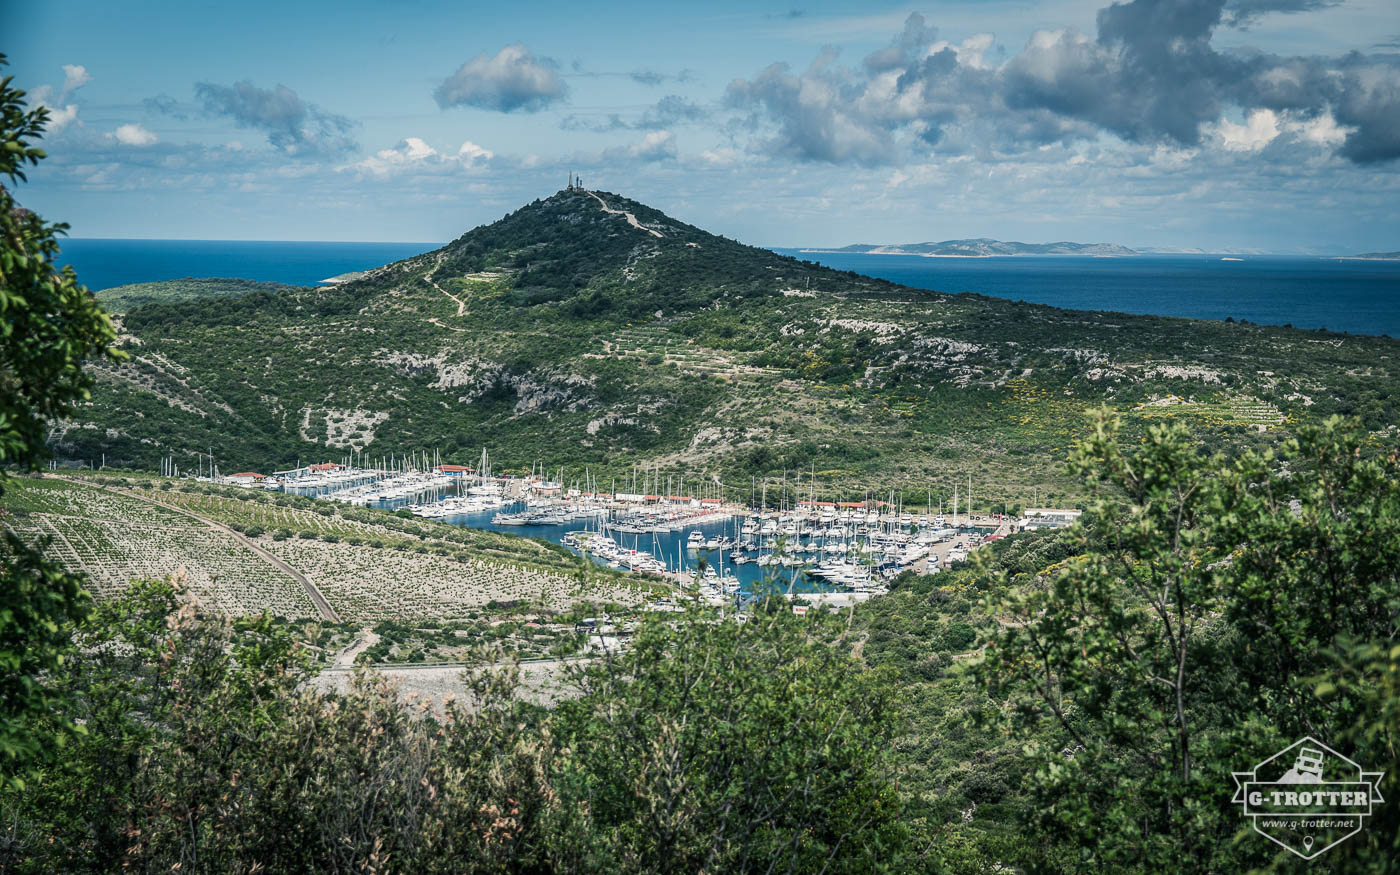 Bild 10 der Bildergalerie “Entlang der Küste Kroatiens”